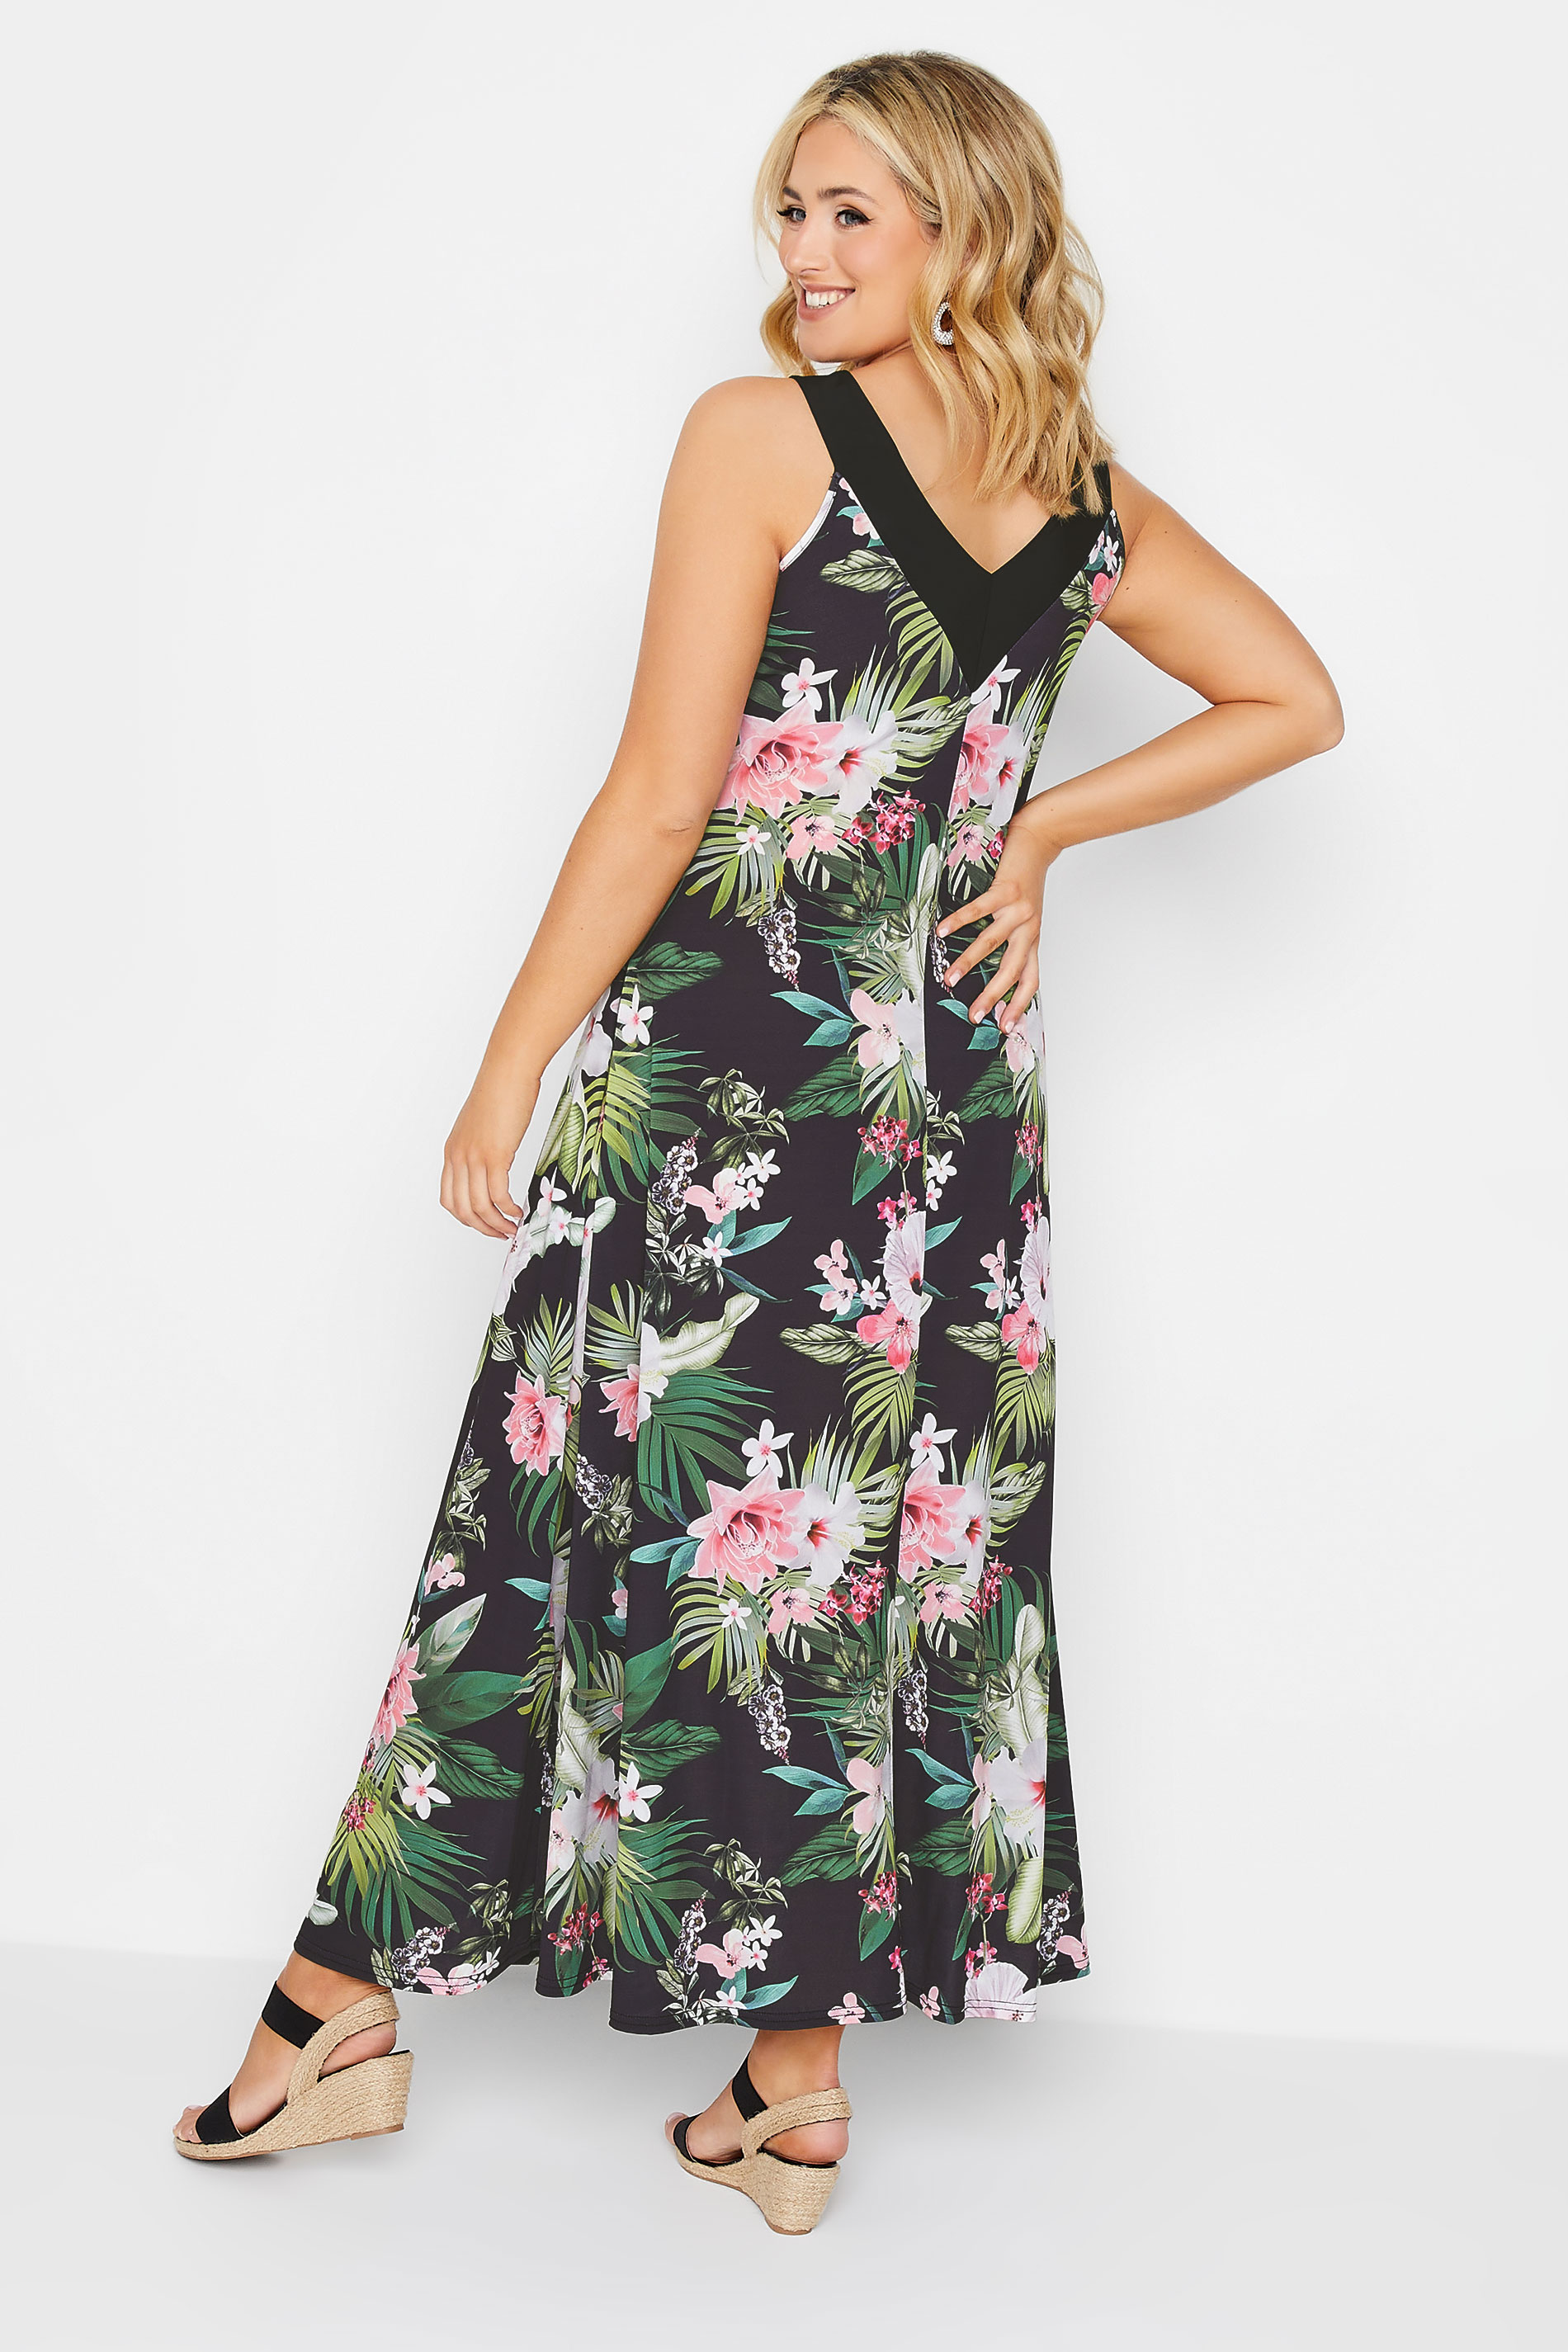 Plus Size Plus Size Black Tropical Print Maxi Dress Online in